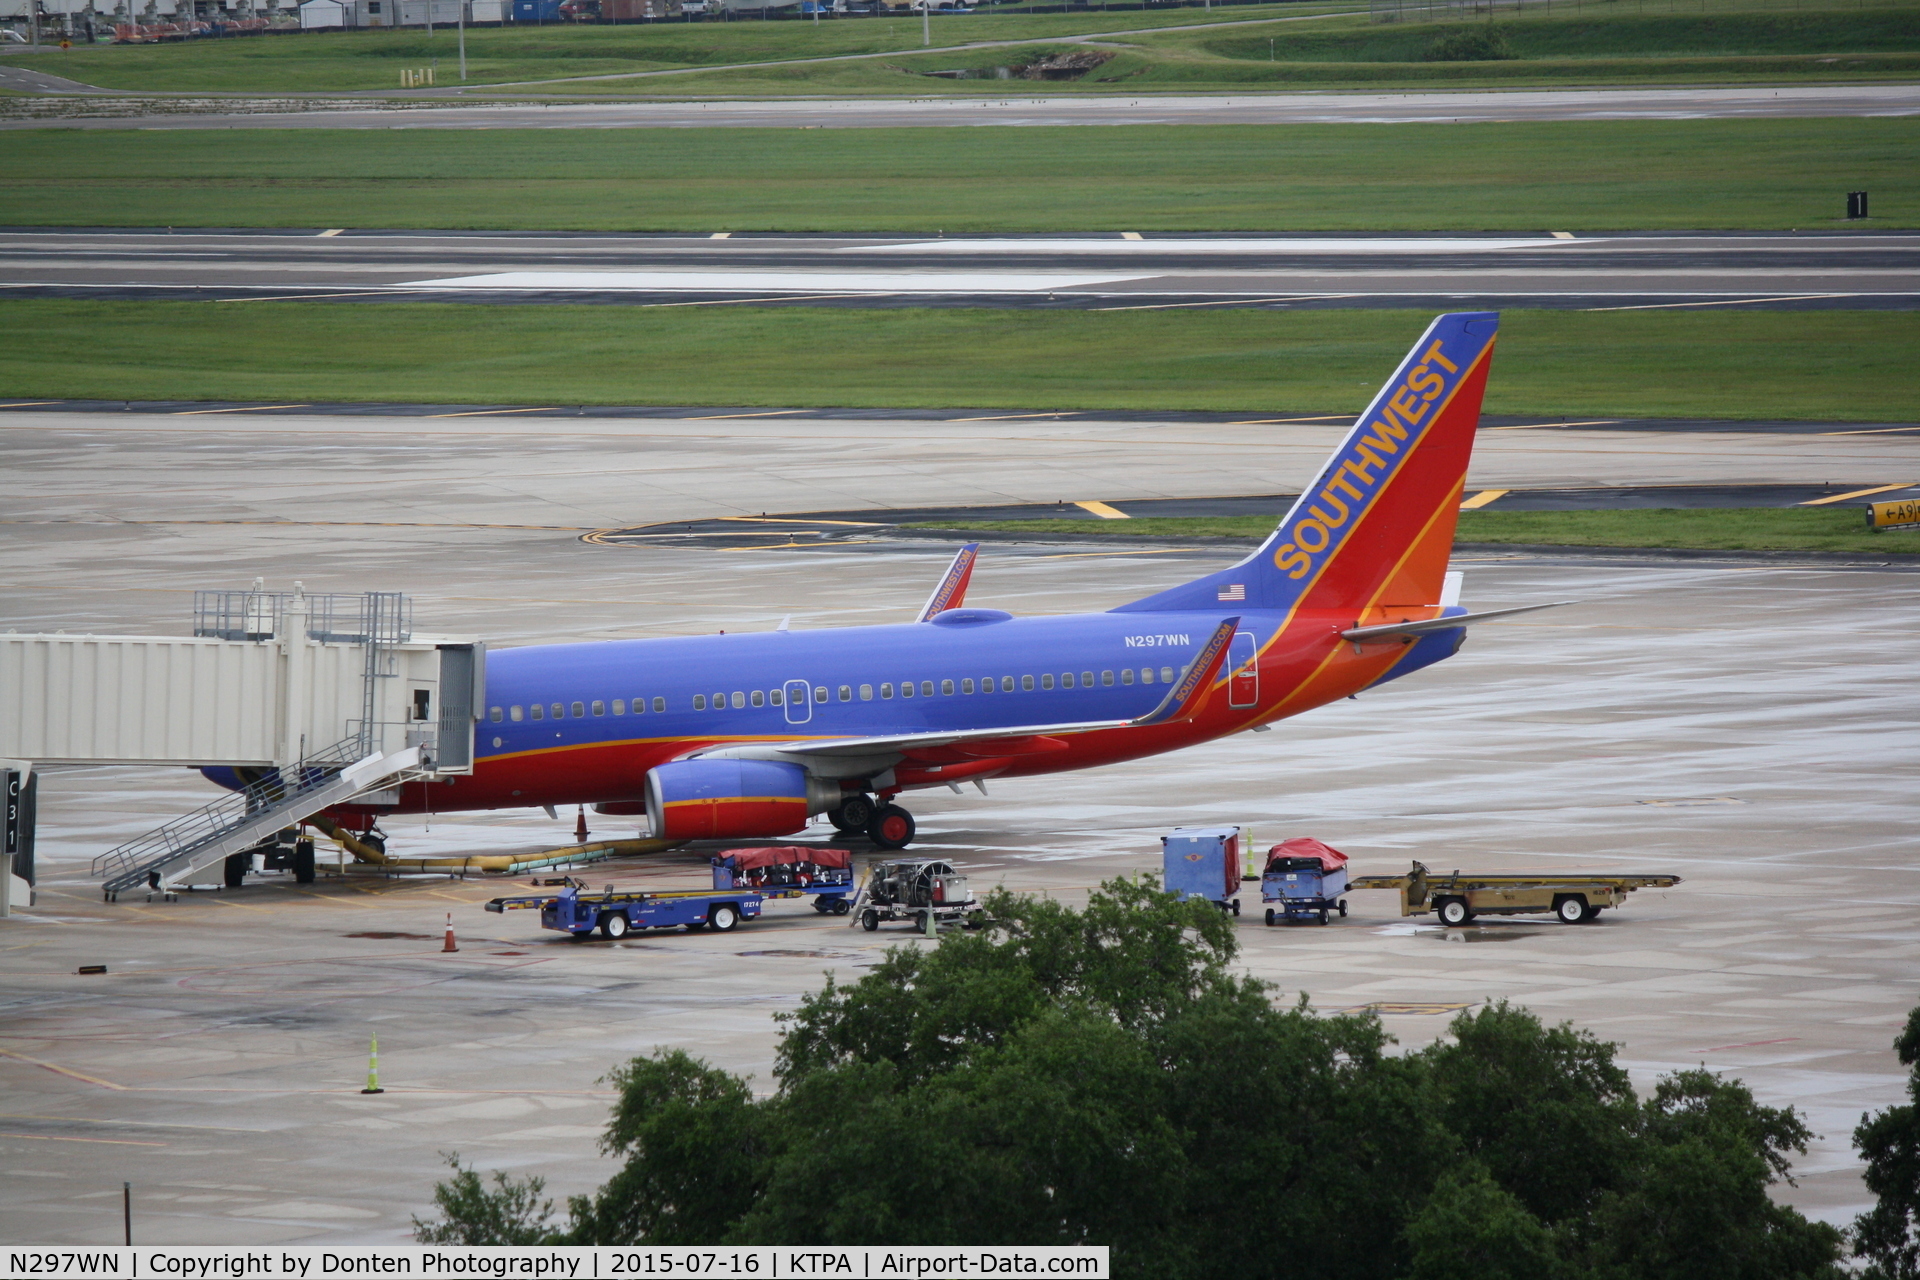 N297WN, 2007 Boeing 737-7H4 C/N 32542, Southwest Flight 3220 (N297WN) sits at the gate at Tampa International Airport following a flight from Indianaplis International Airport